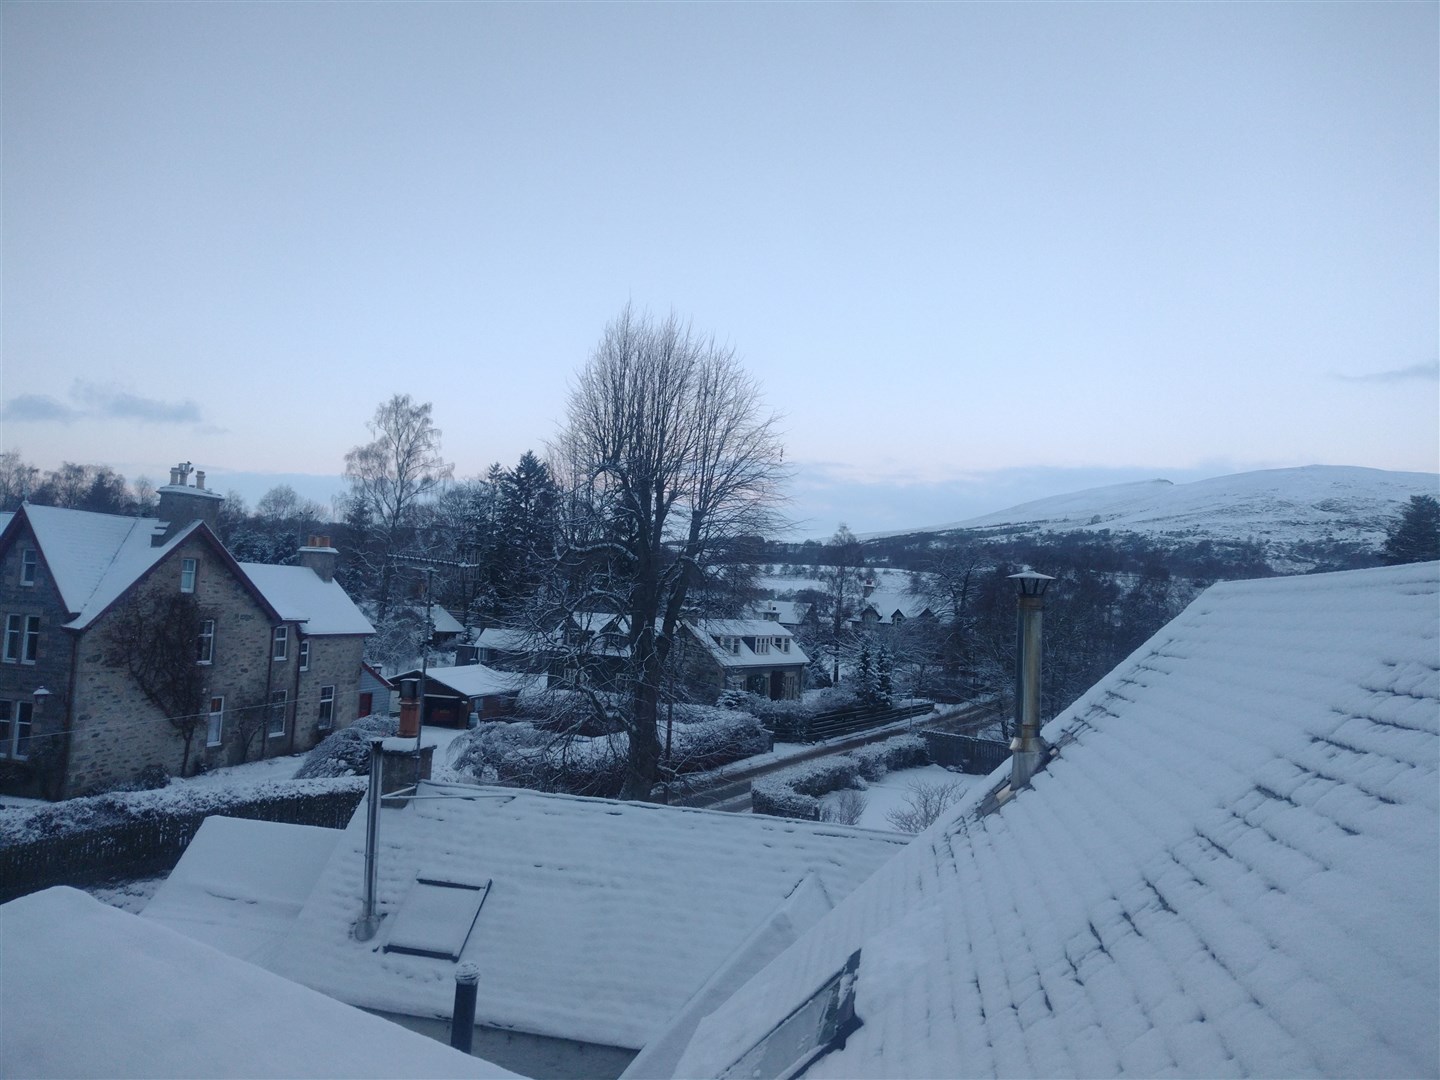 Snowy conditions in Kincraig.